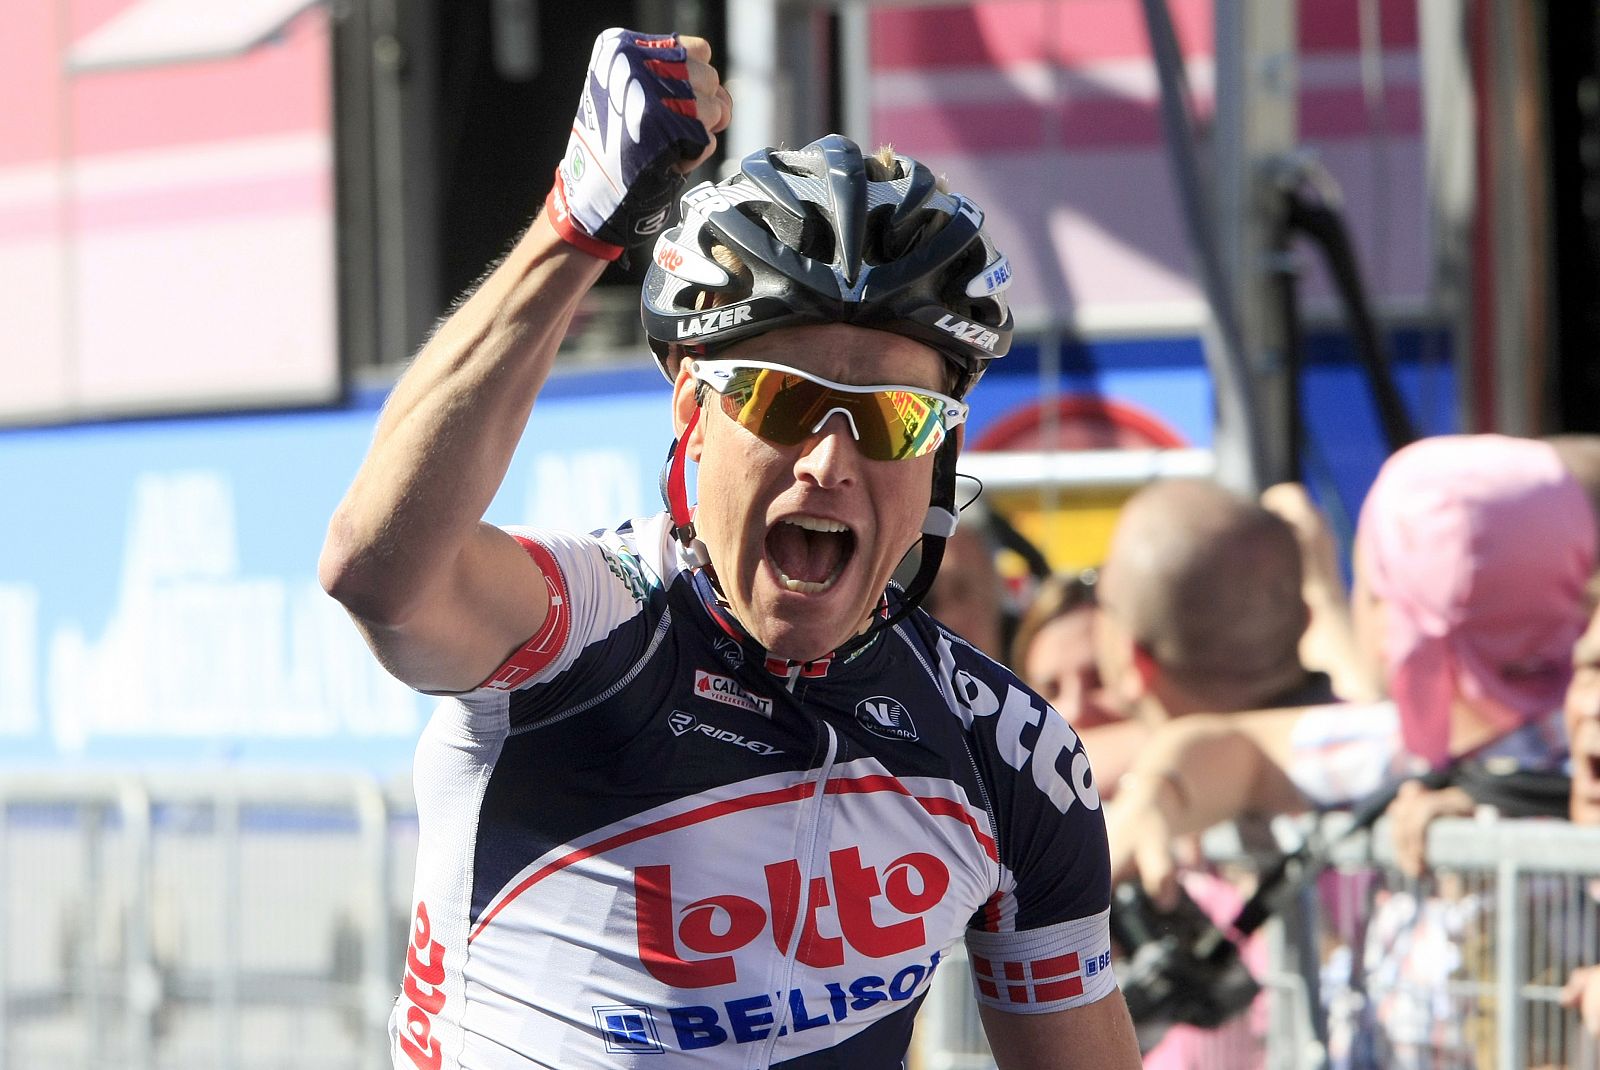 Lars Bak gana la duodécima etapa del Giro